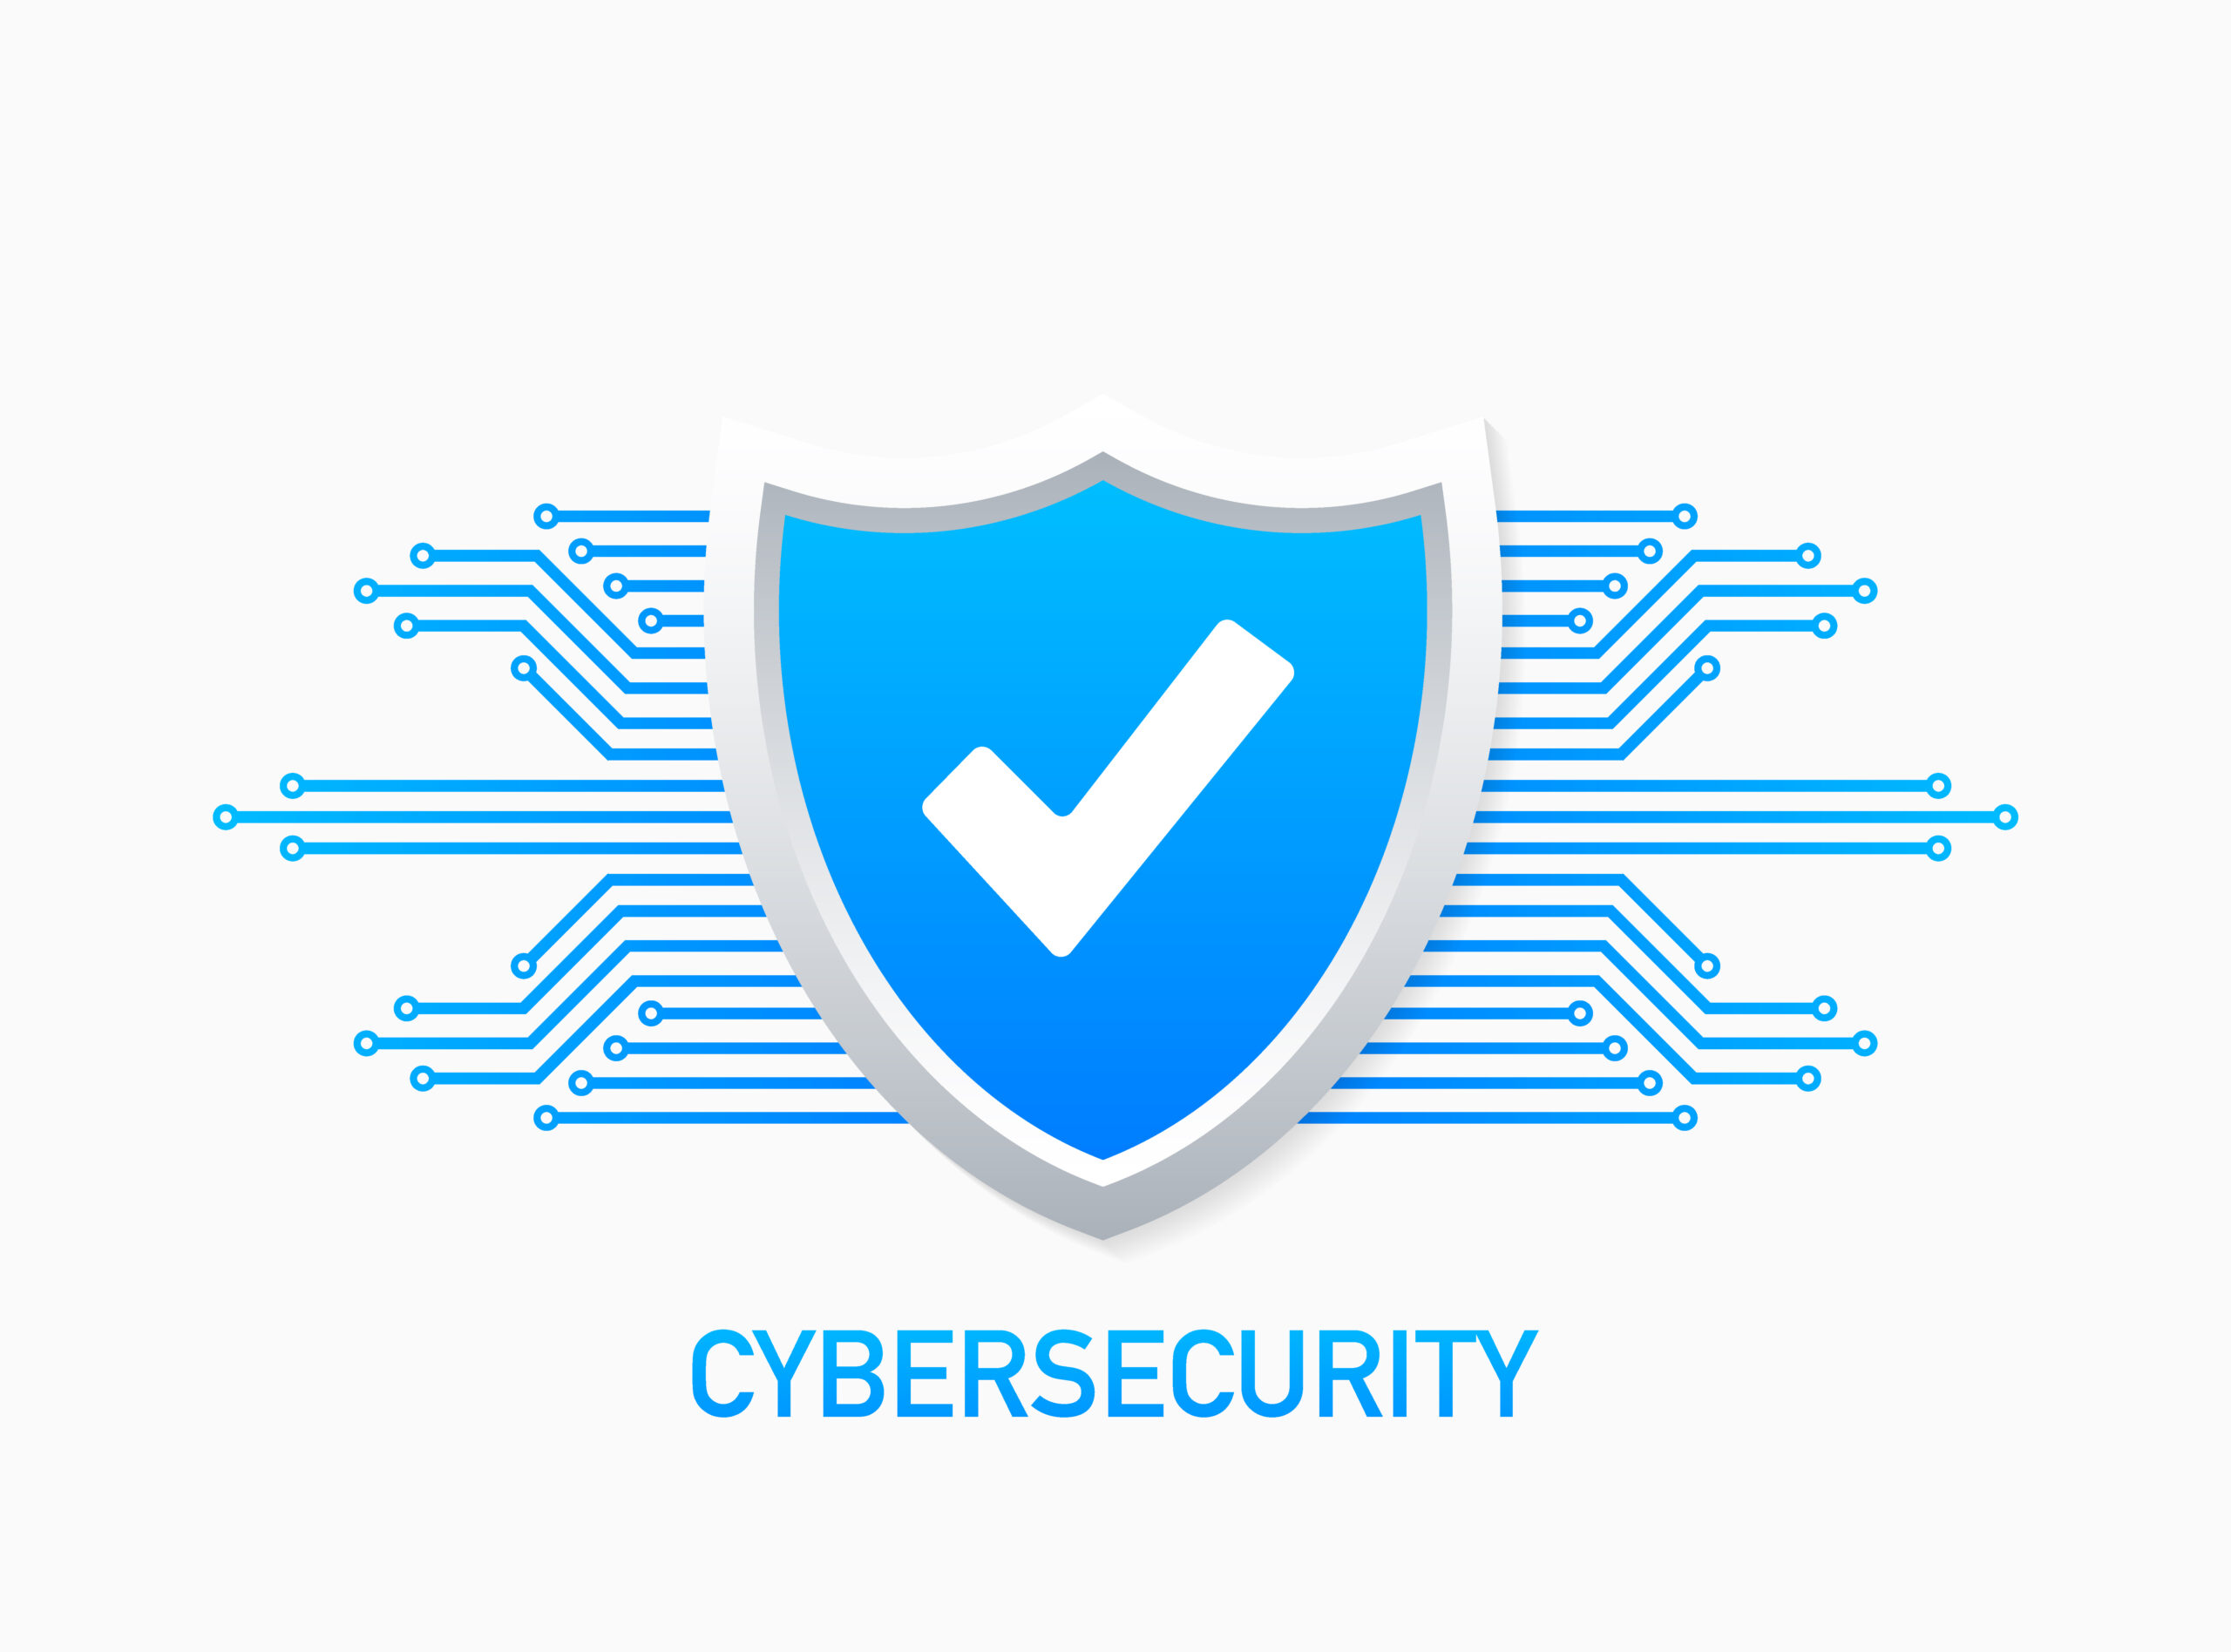 Cyber security vector